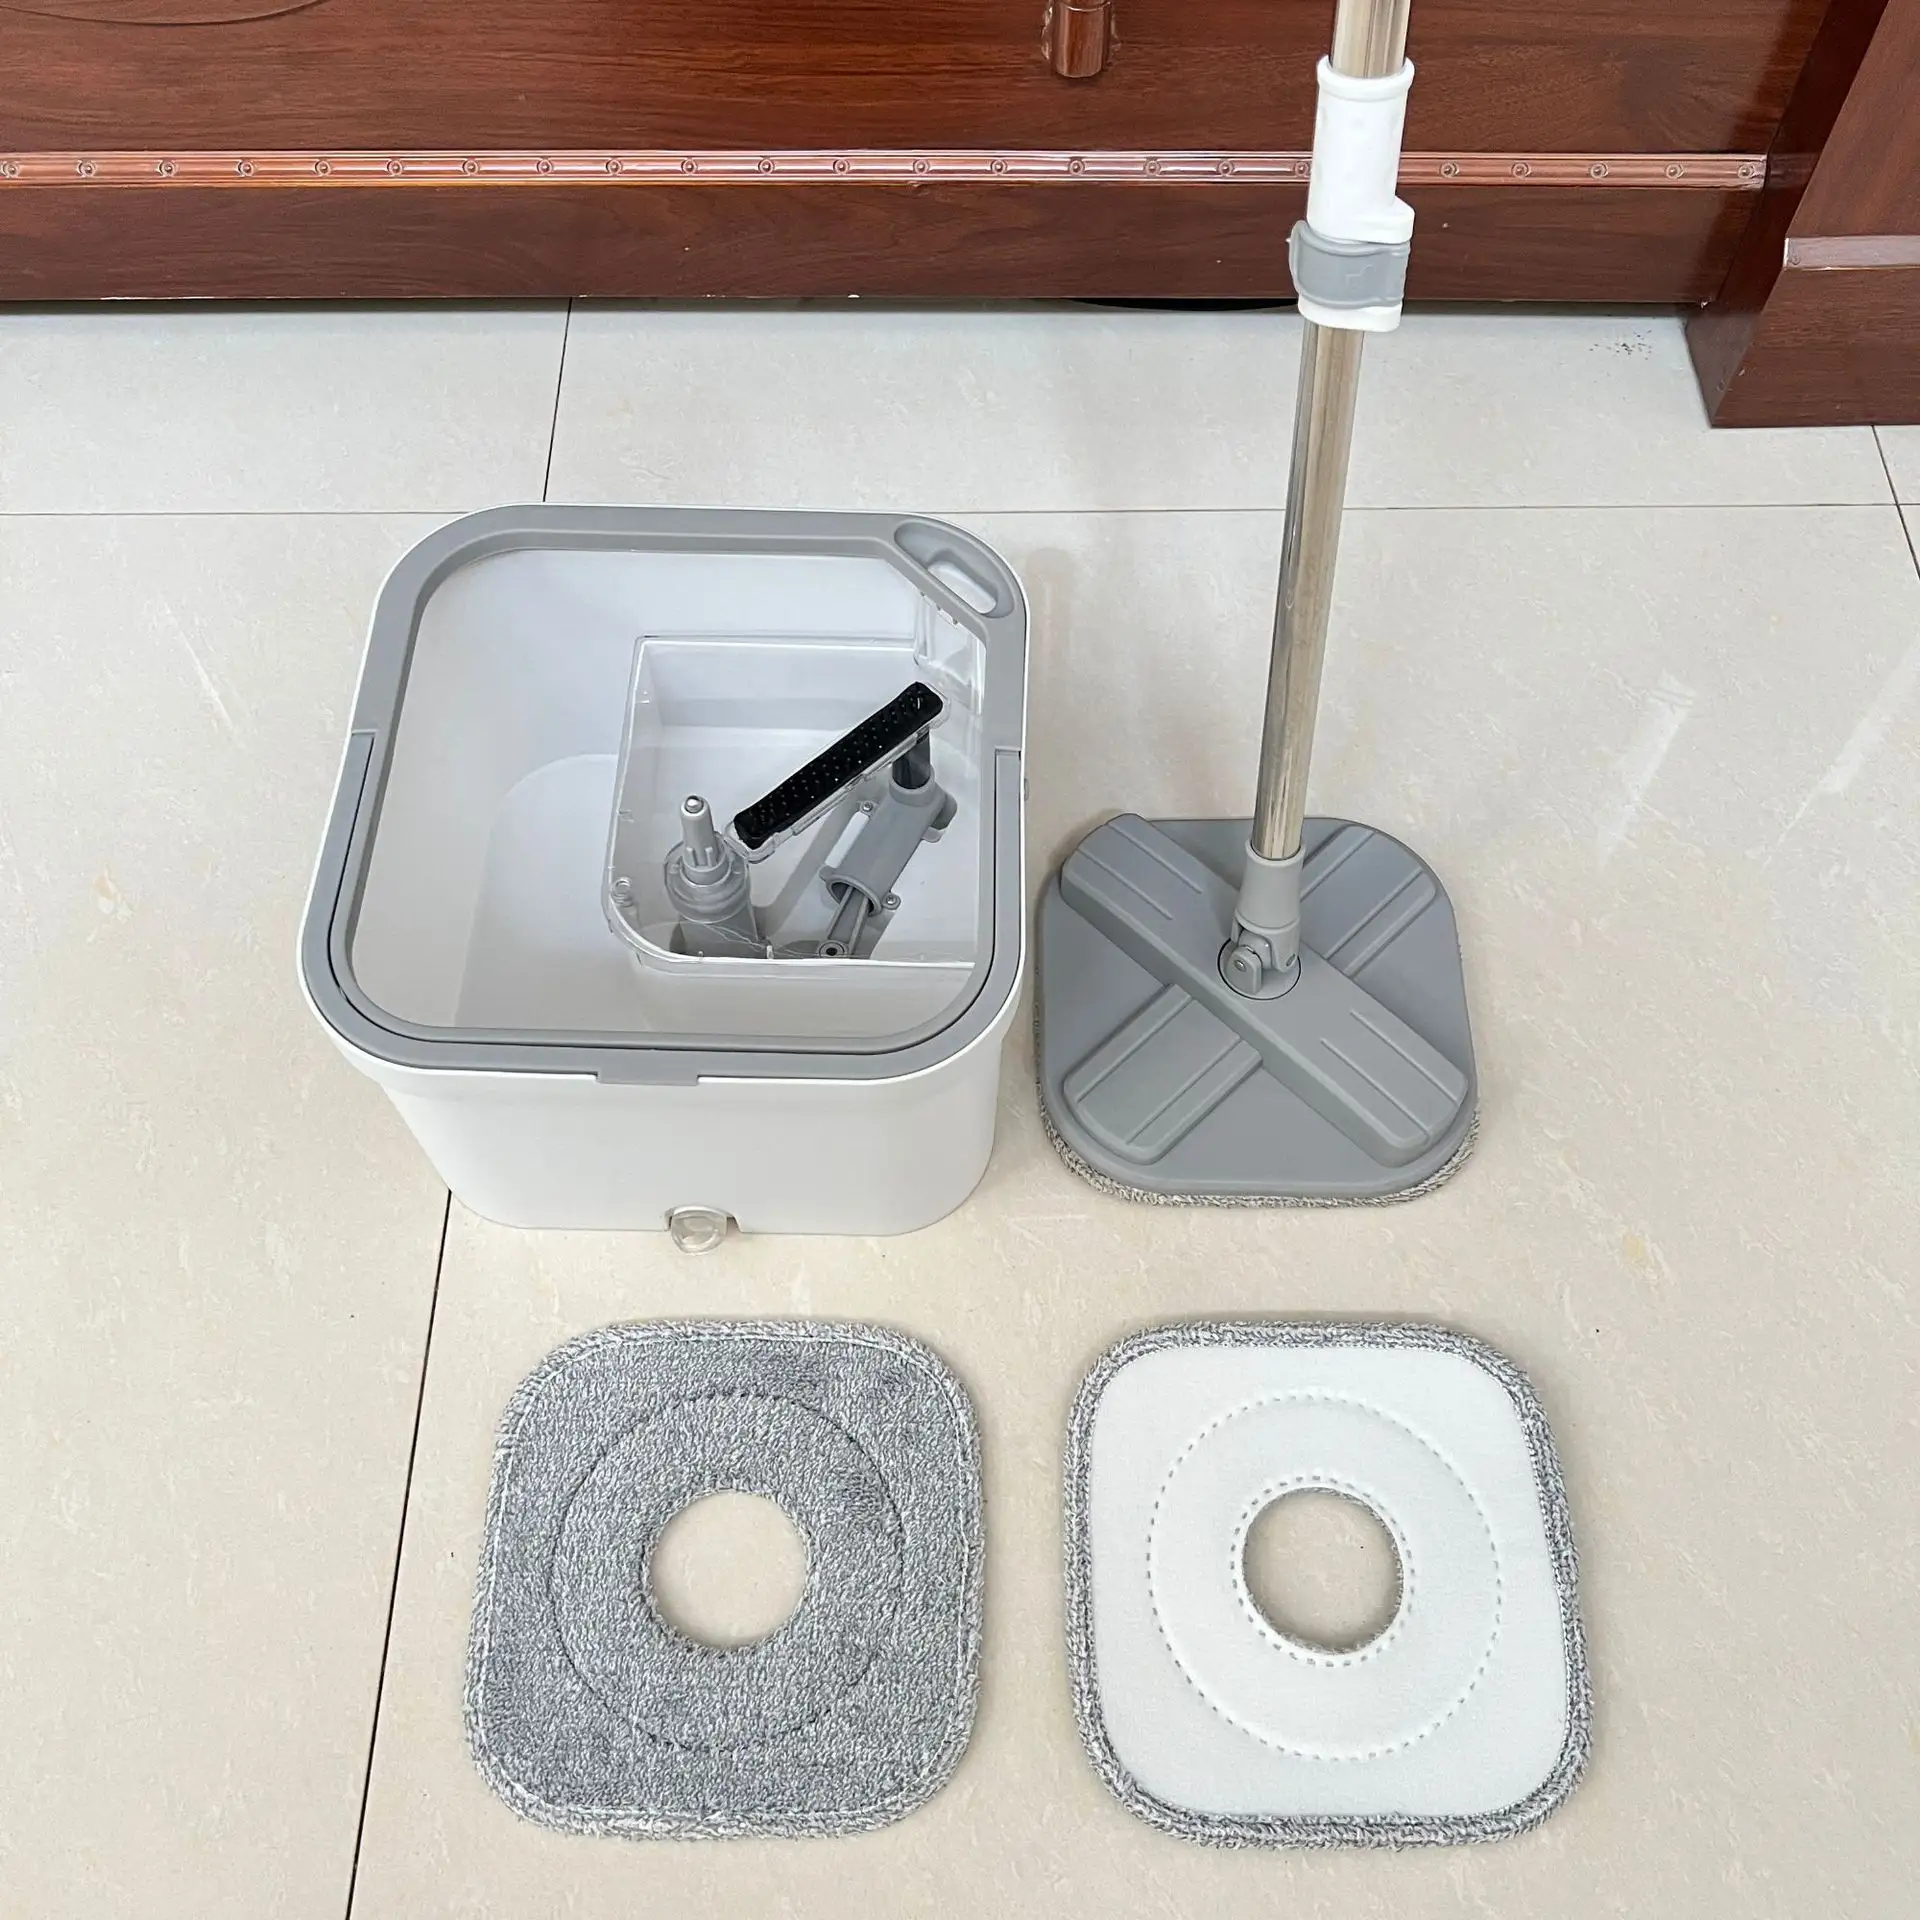 Magic Flat Lazy Spinner Mop Mikro faser 360 drehbar verstellbar Reinigung Boden mopp und Eimer Set